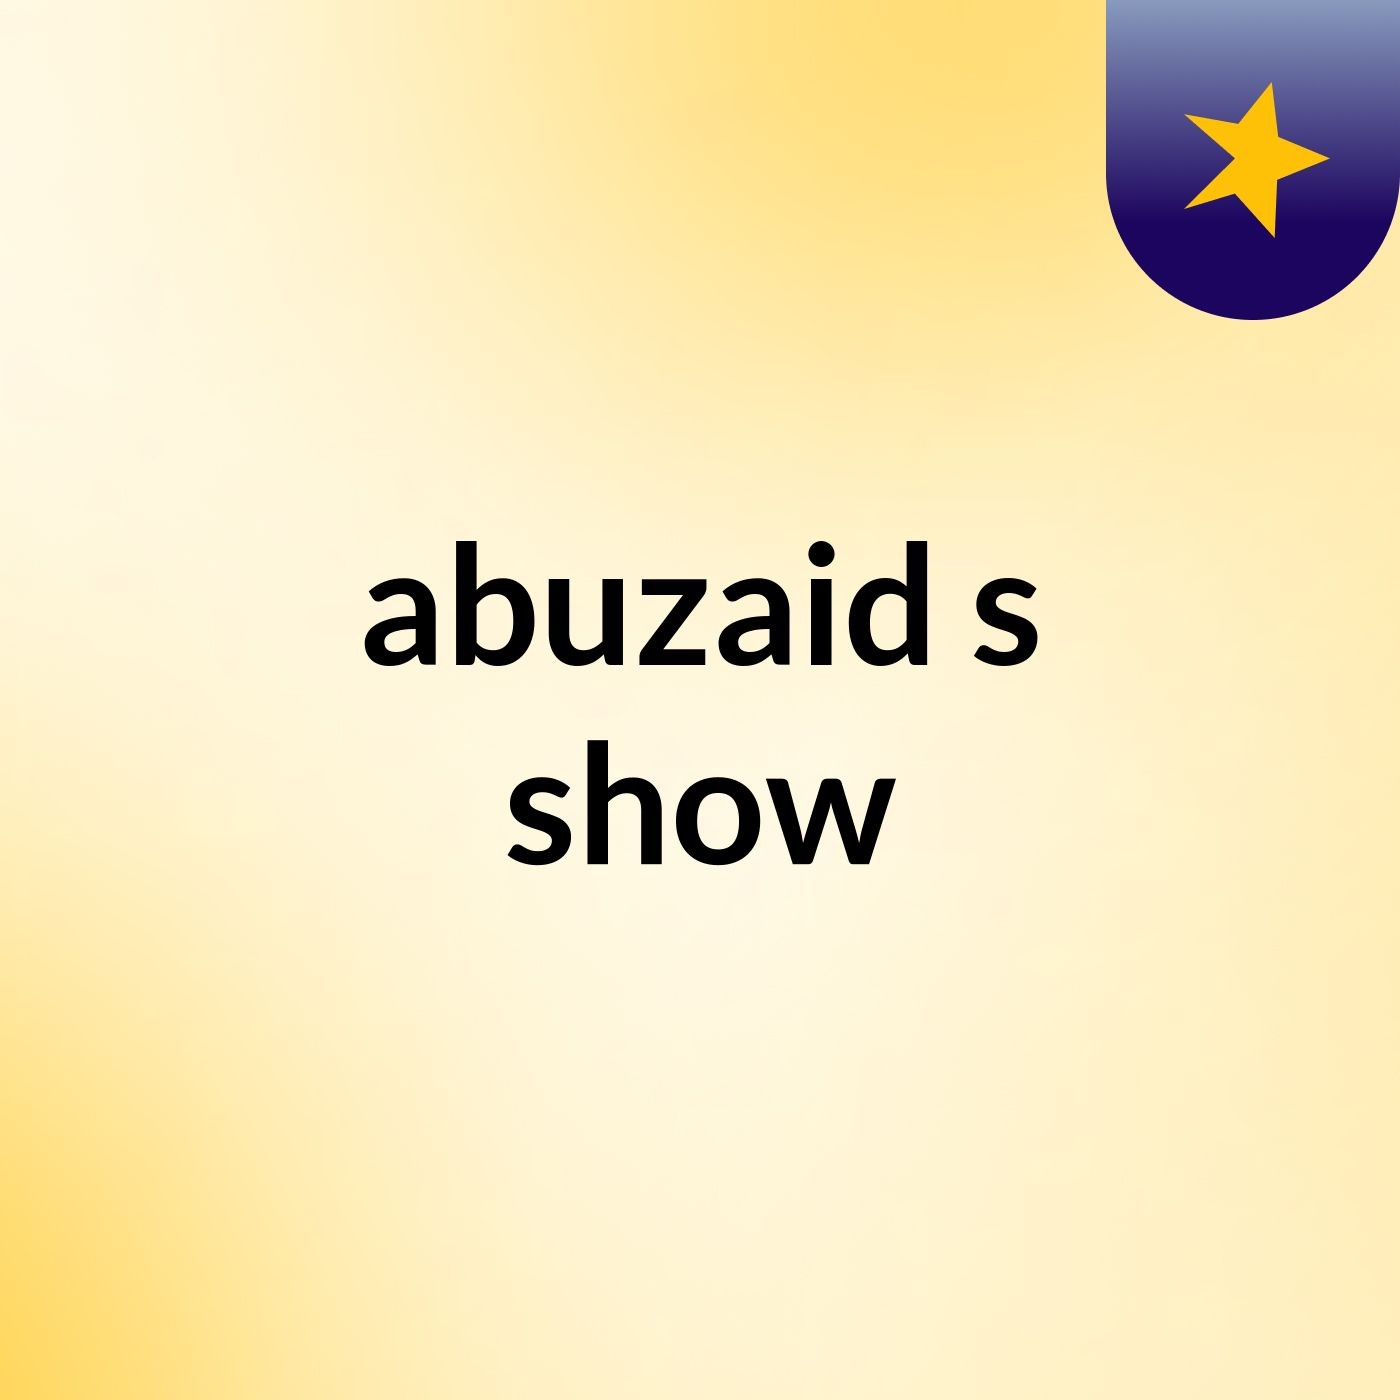 abuzaid's show